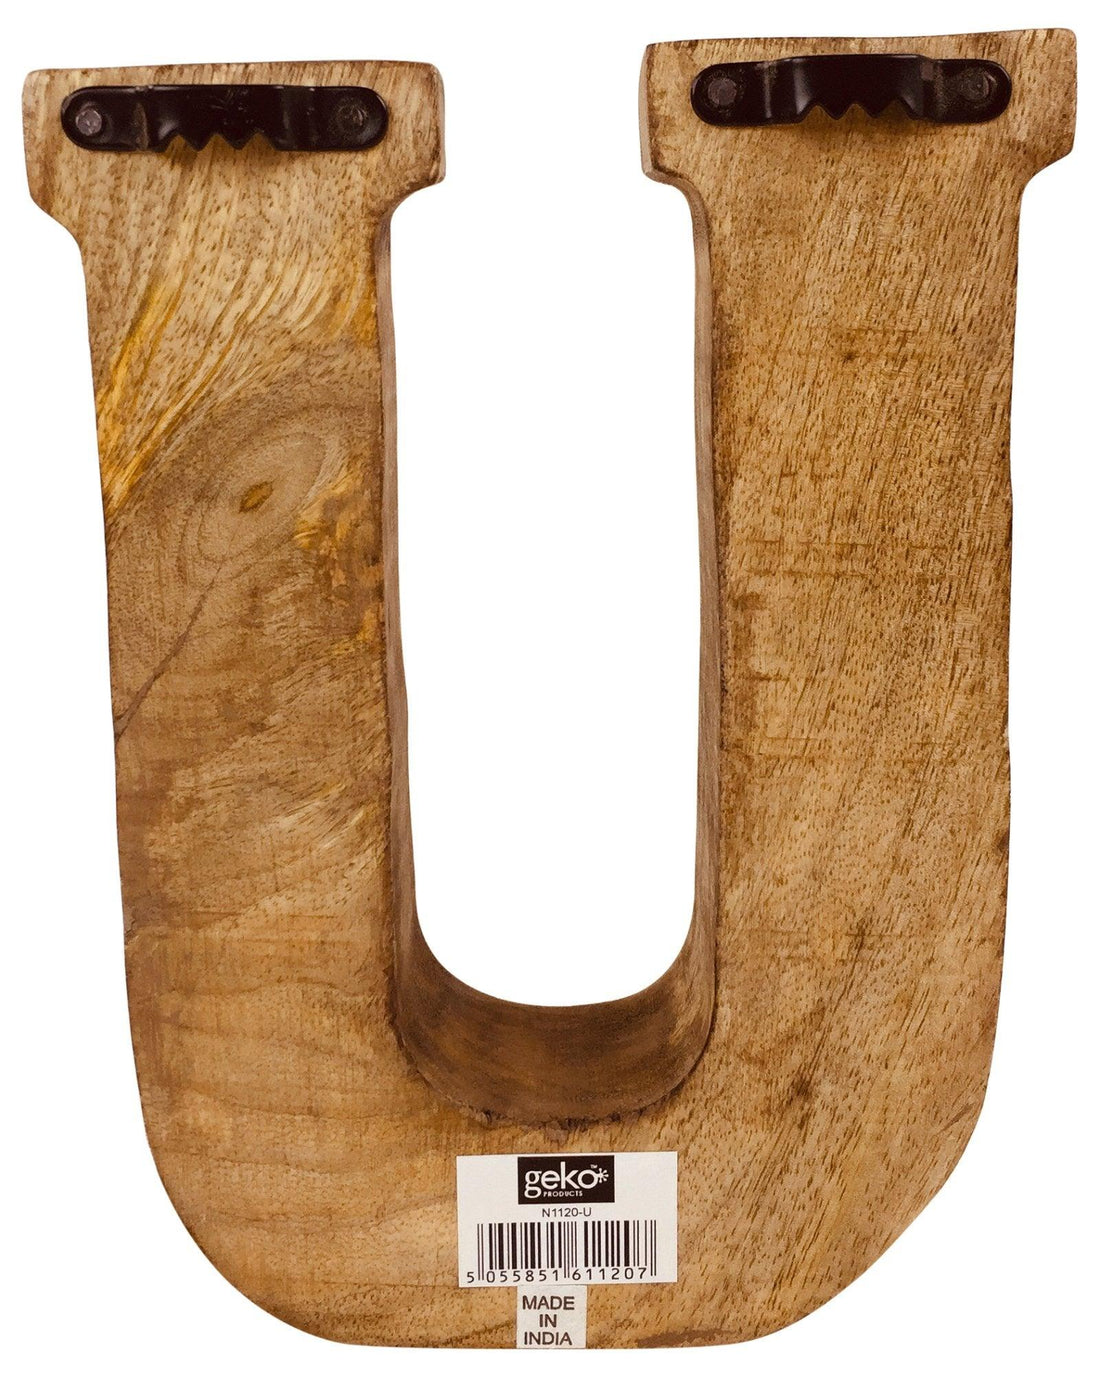 Hand Carved Wooden Embossed Letter U - £18.99 - Single Letters 